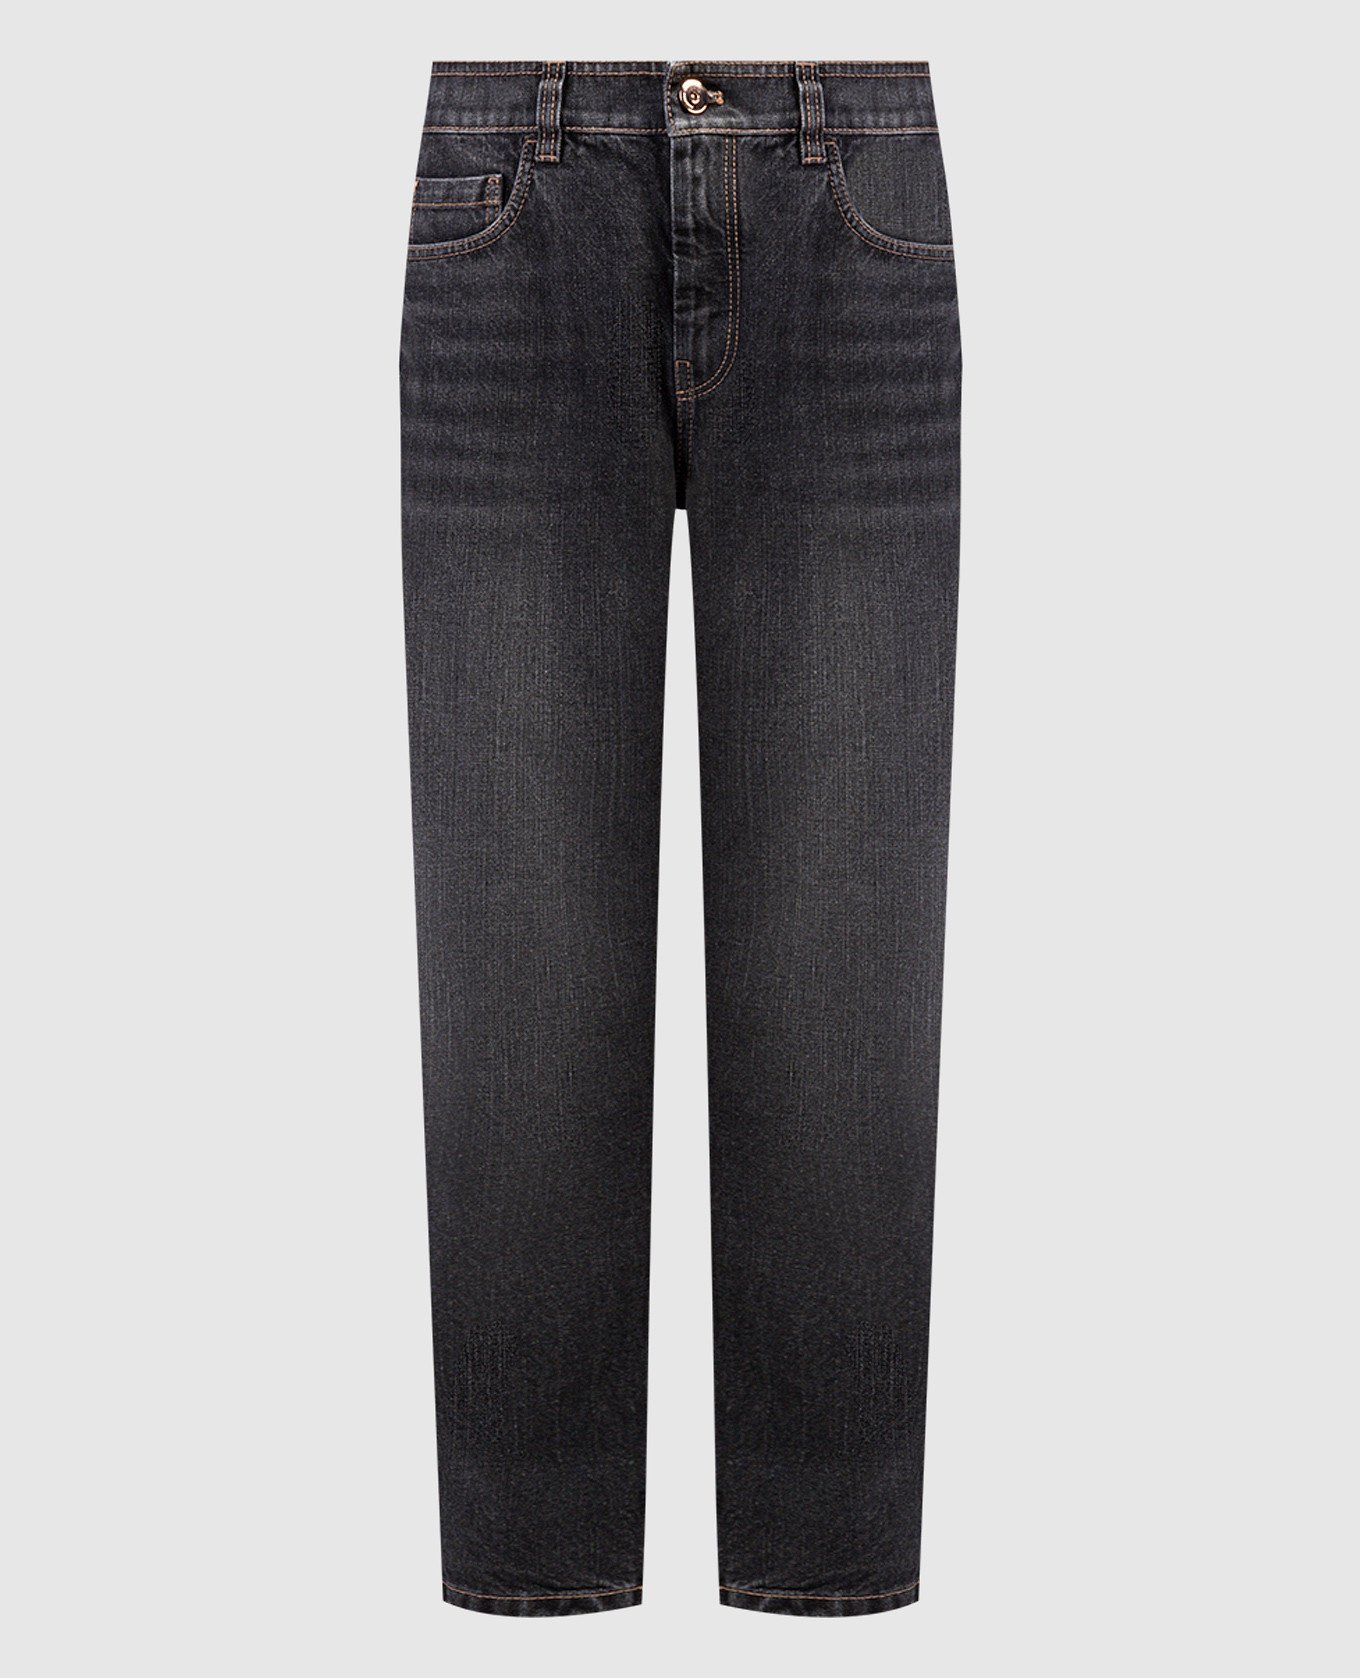 Gray jeans with ecolatun monil chain